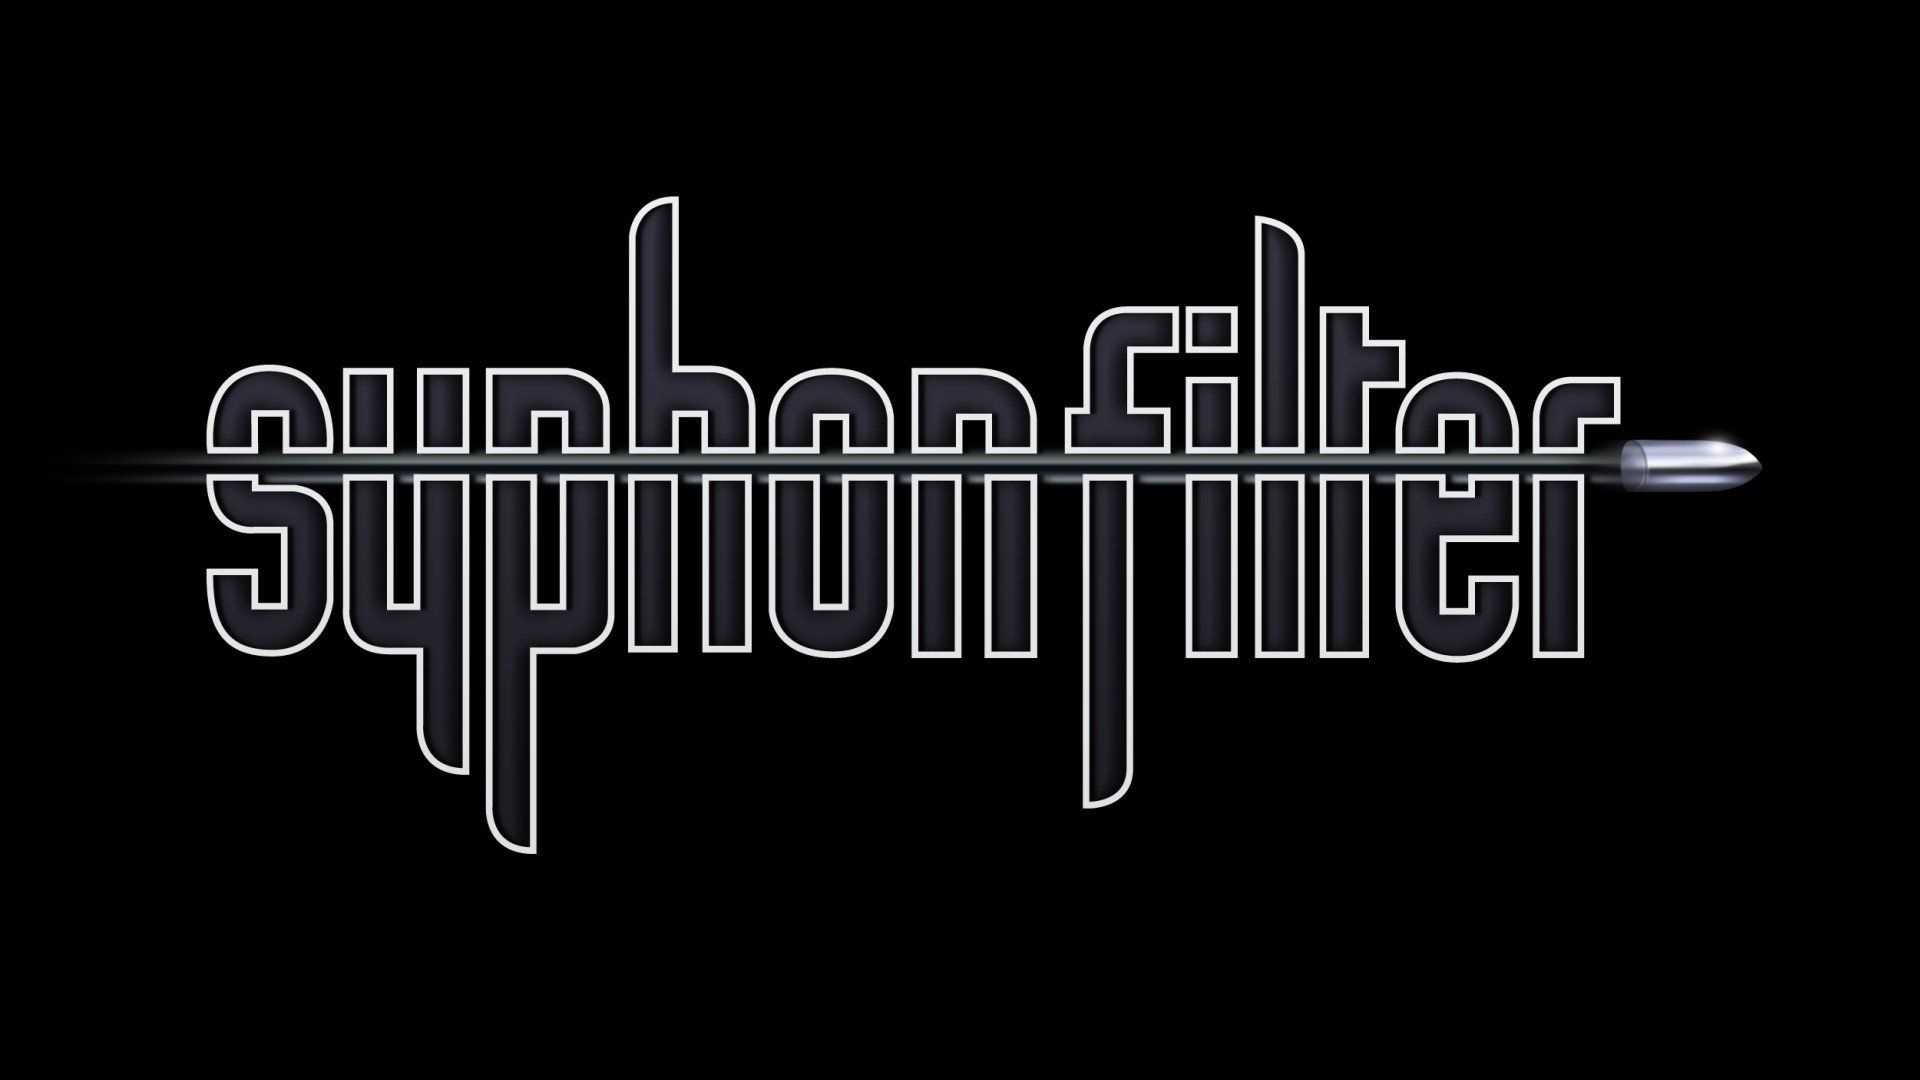 Syphon Filter HD Wallpaper